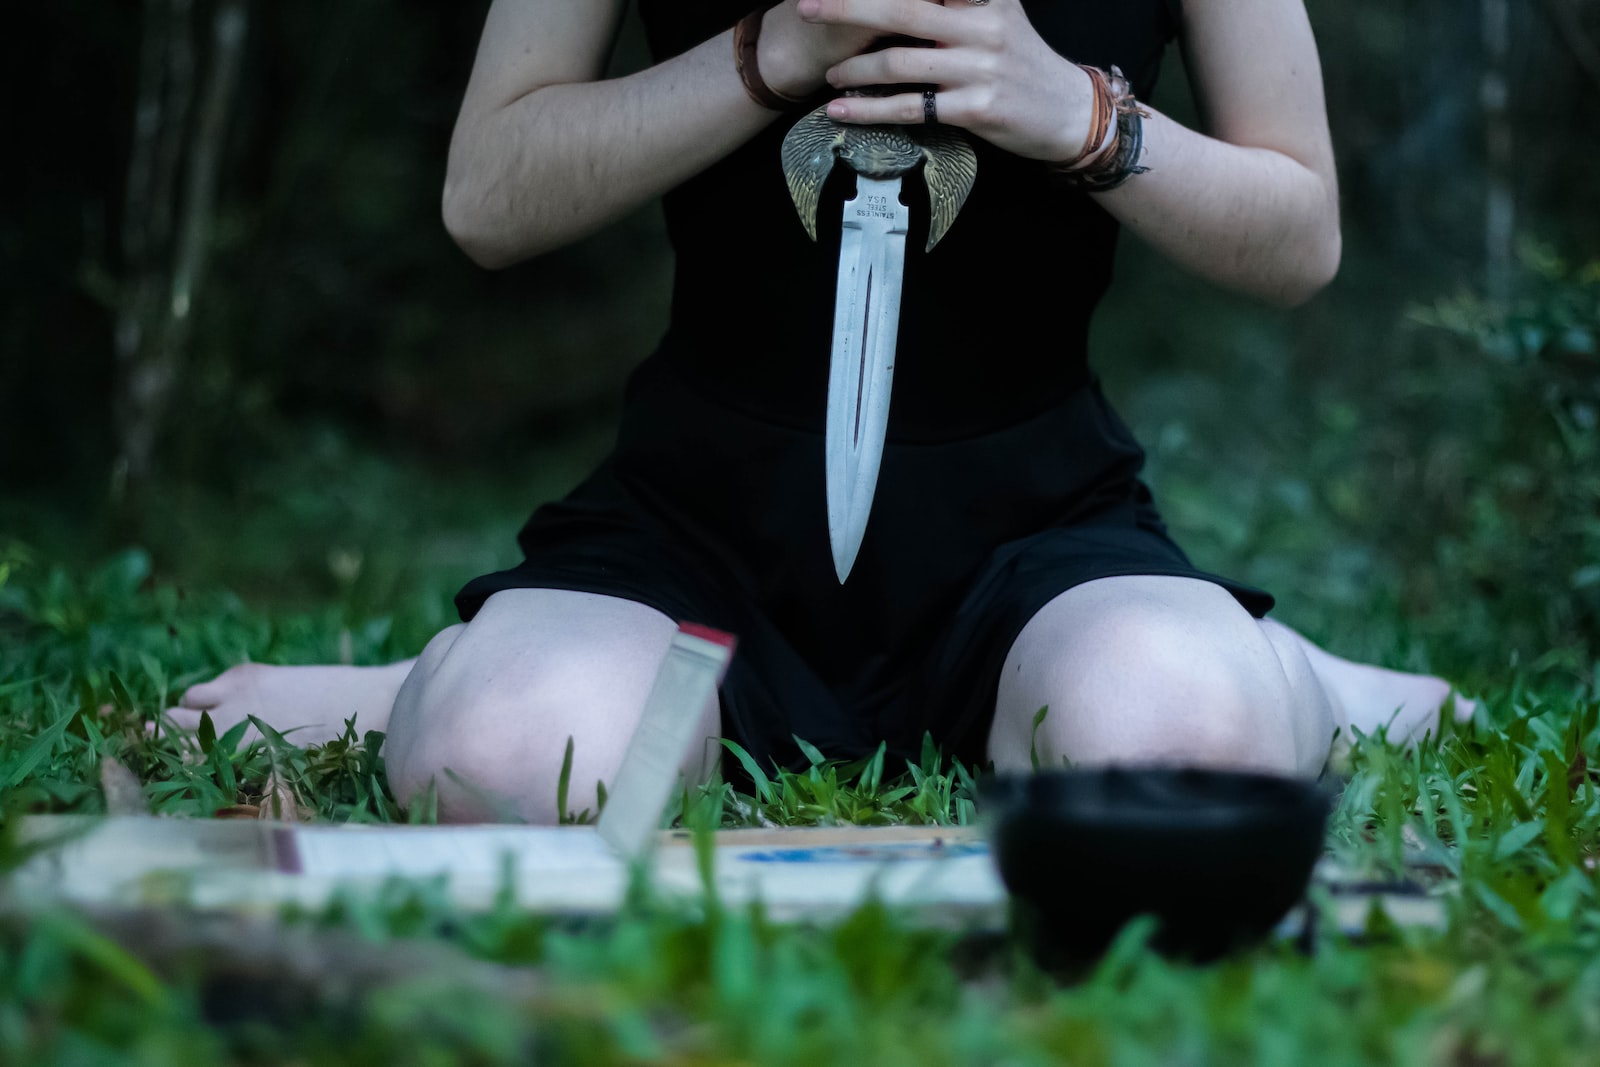 woman kneeling on grass holding knife